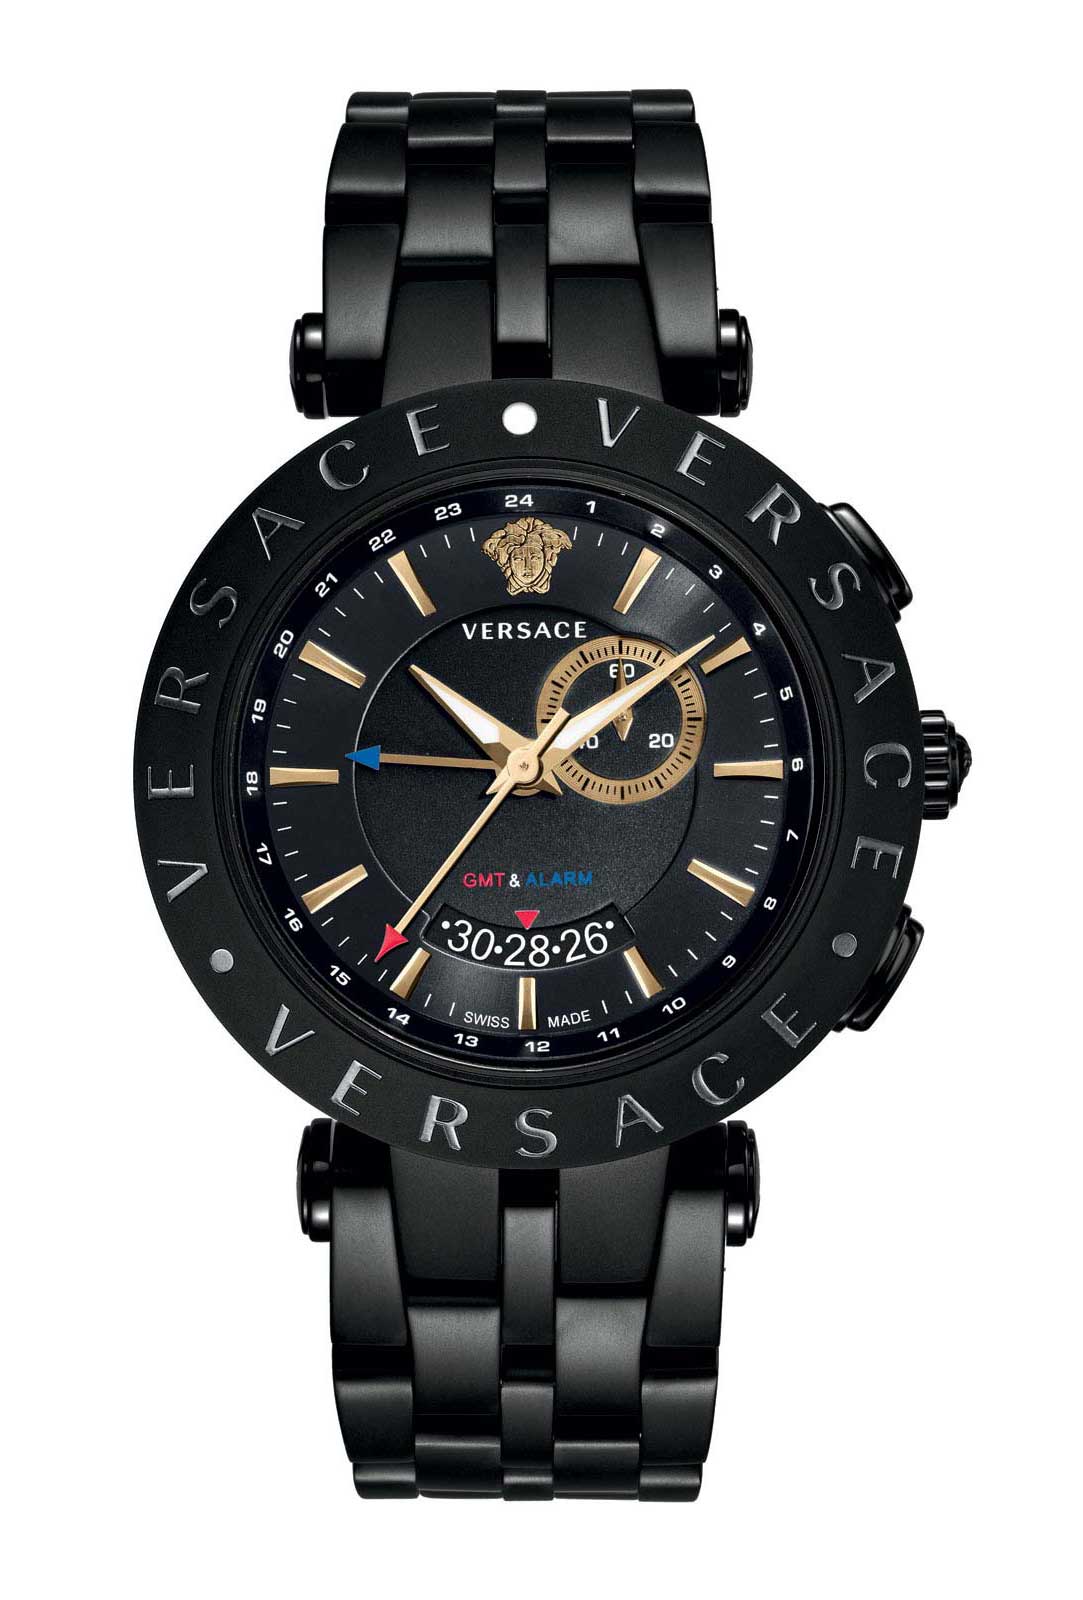 Versace QUARTZ GMT watch 8176-1990 STEEL BLACK DIAL